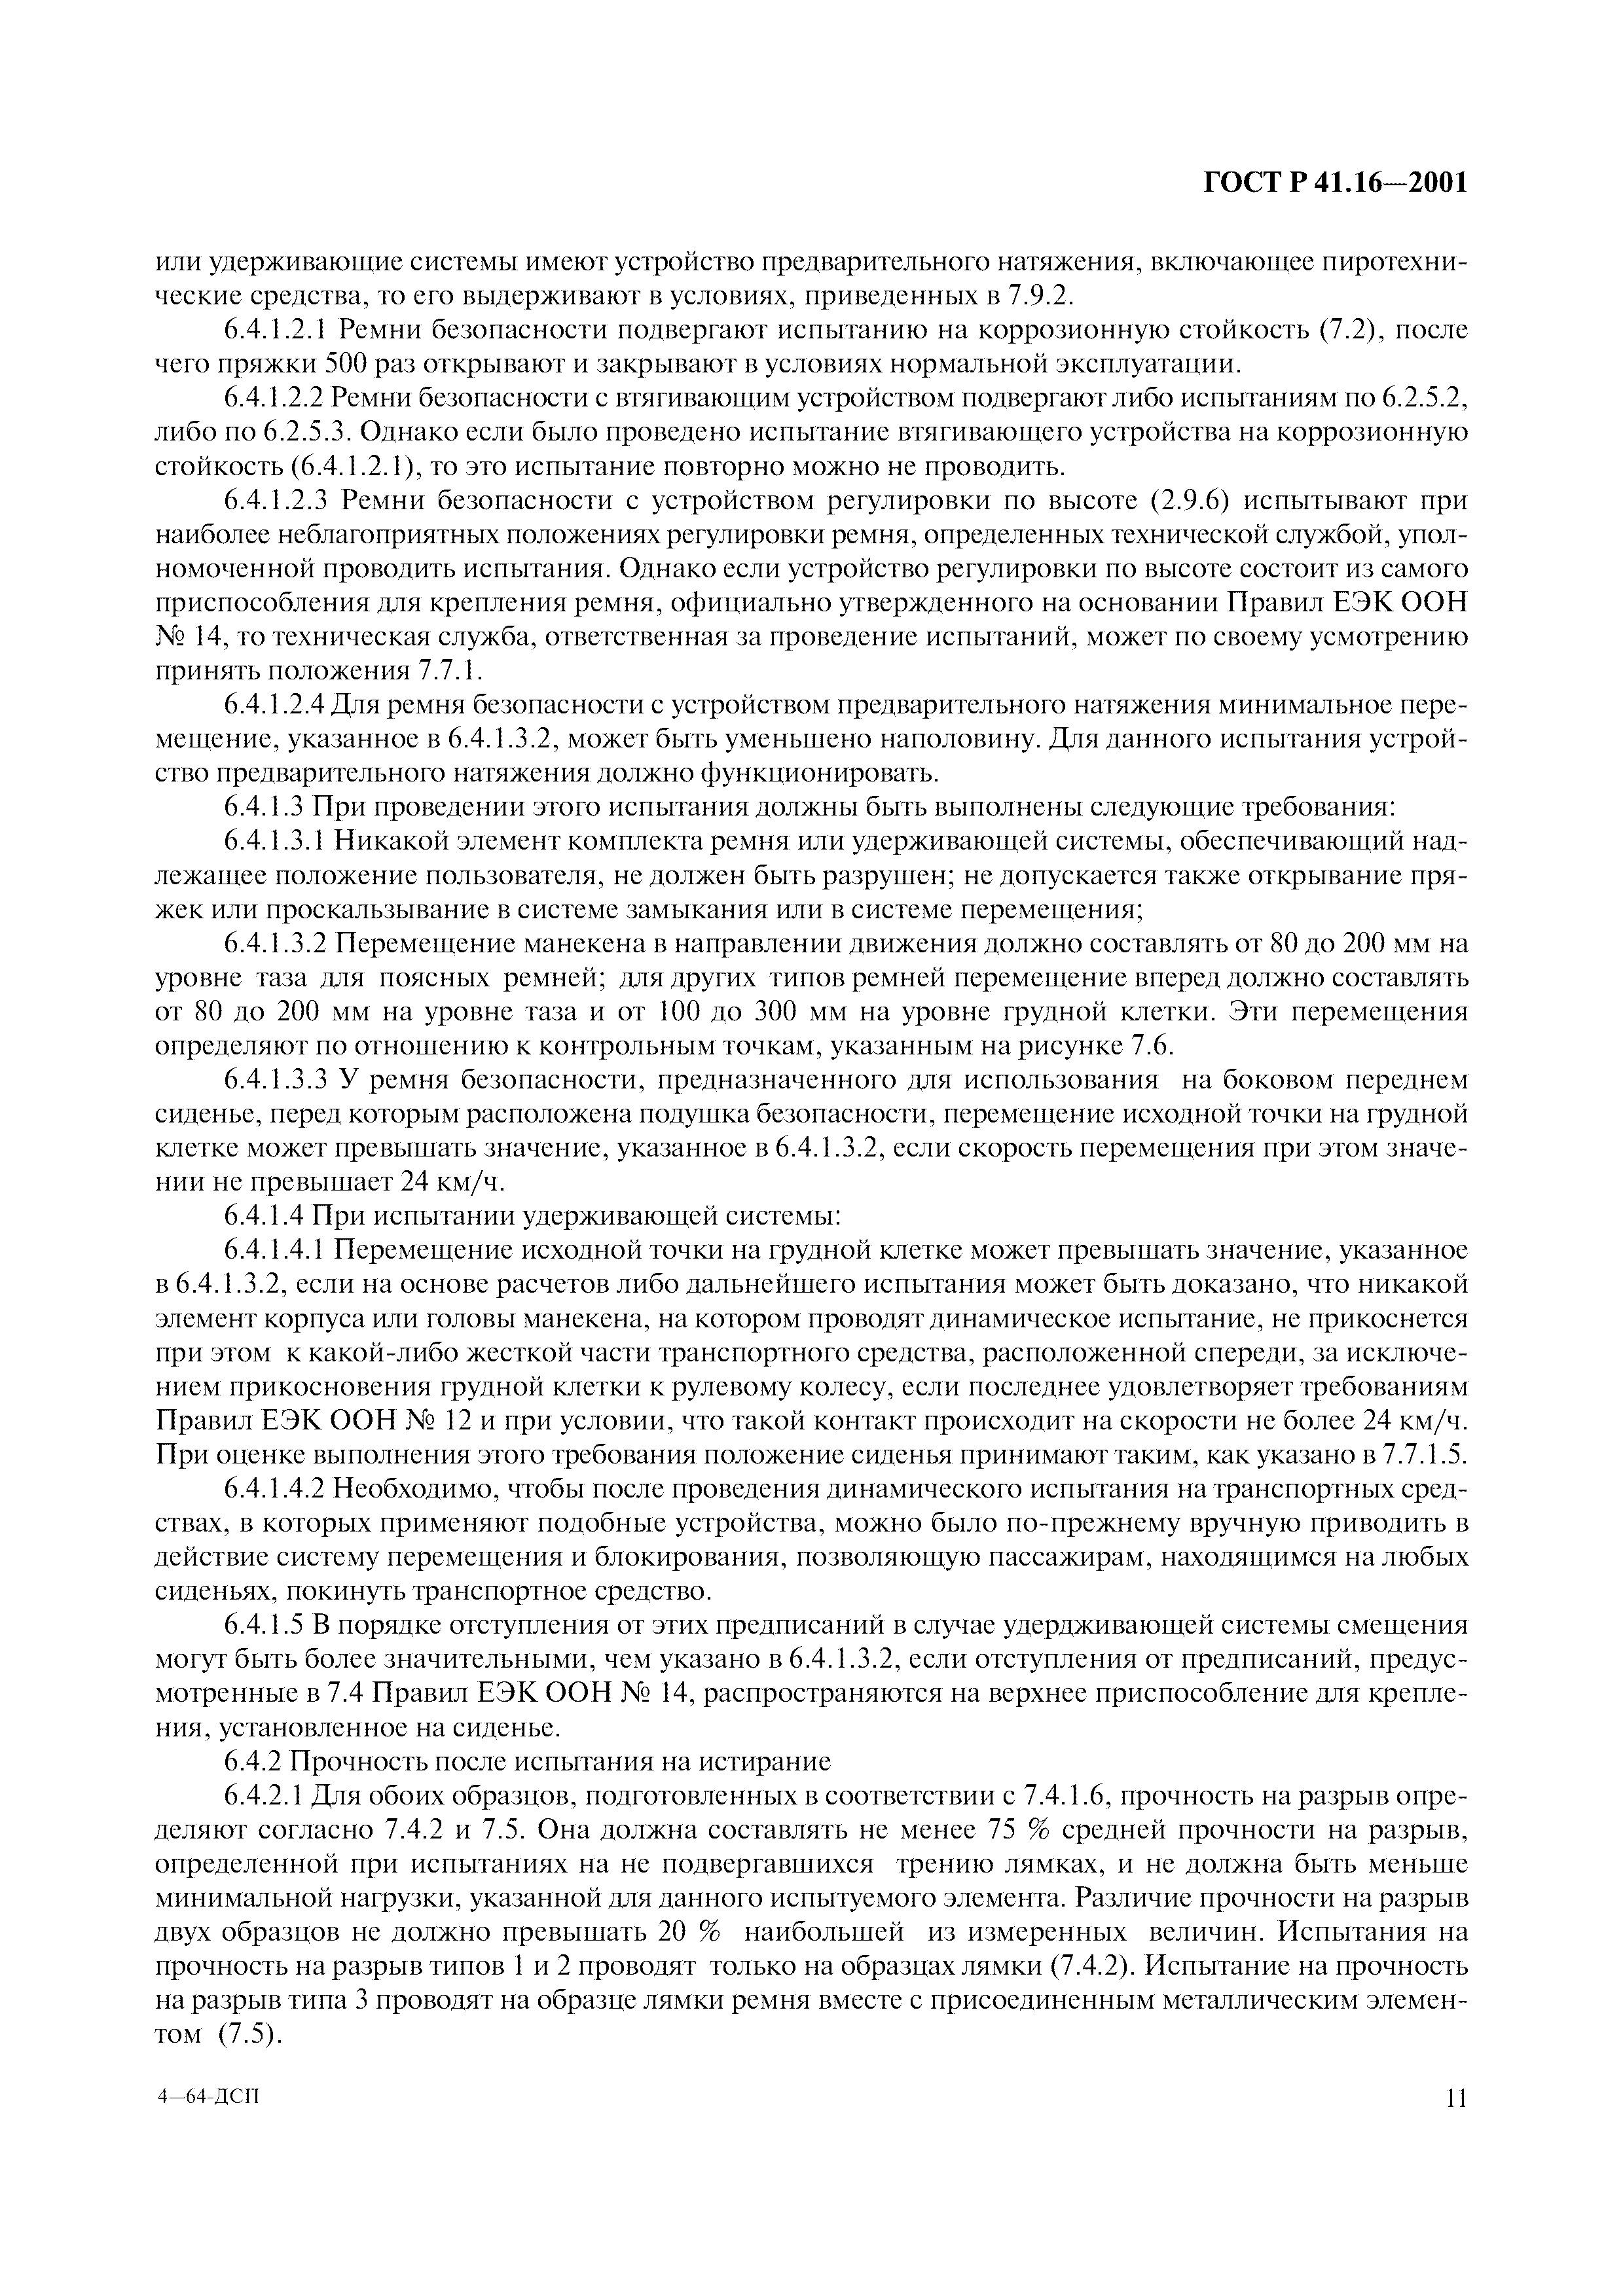 ГОСТ Р 41.16-2001. Страница 14